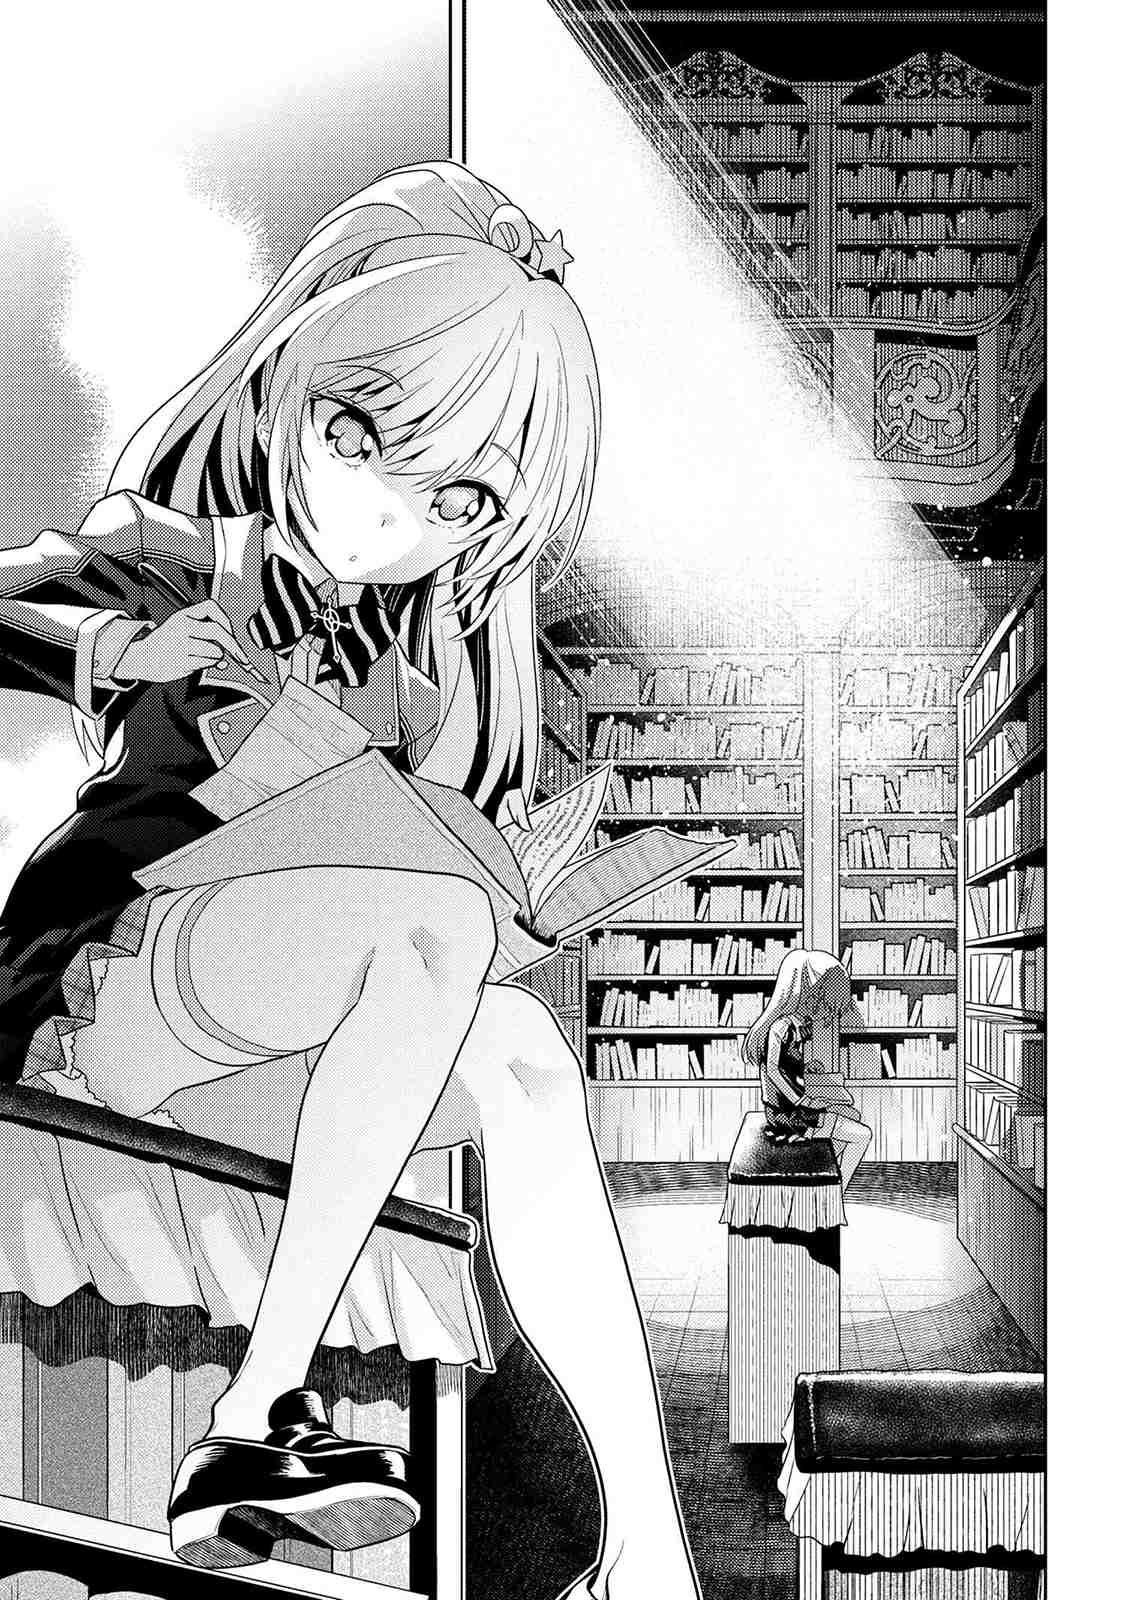 Read Sekai Saikyou no Assassin, Isekai Kizoku ni Tensei Suru Manga English  [New Chapters] Online Free - MangaClash